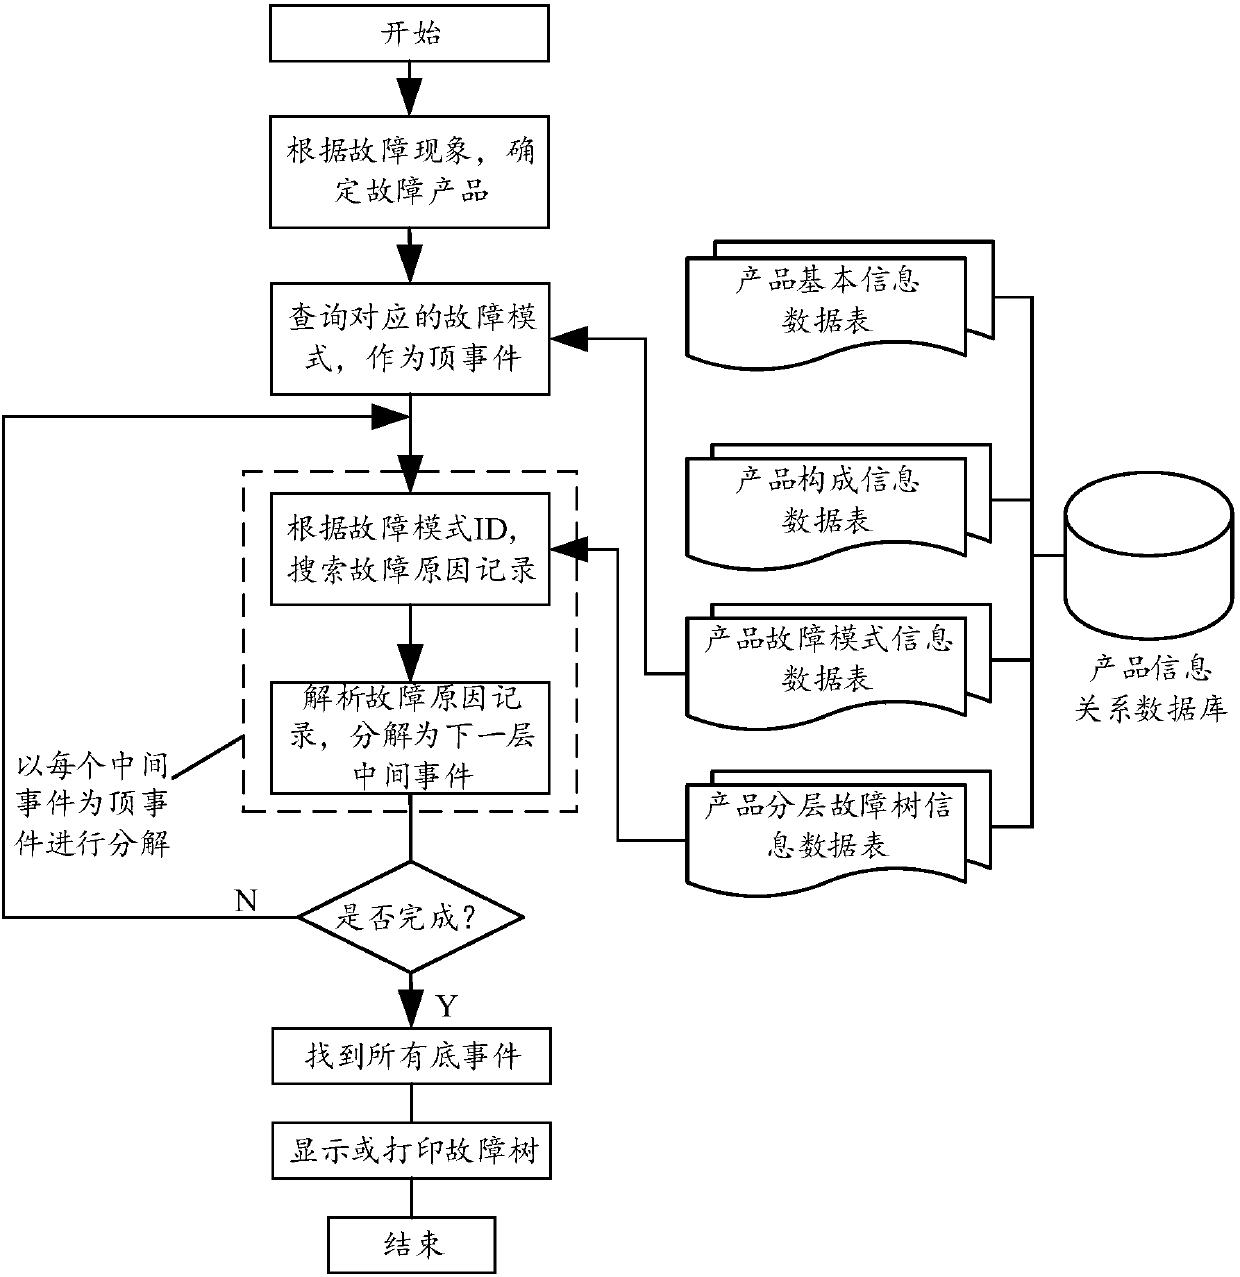 Fault tree construction method based on relational database